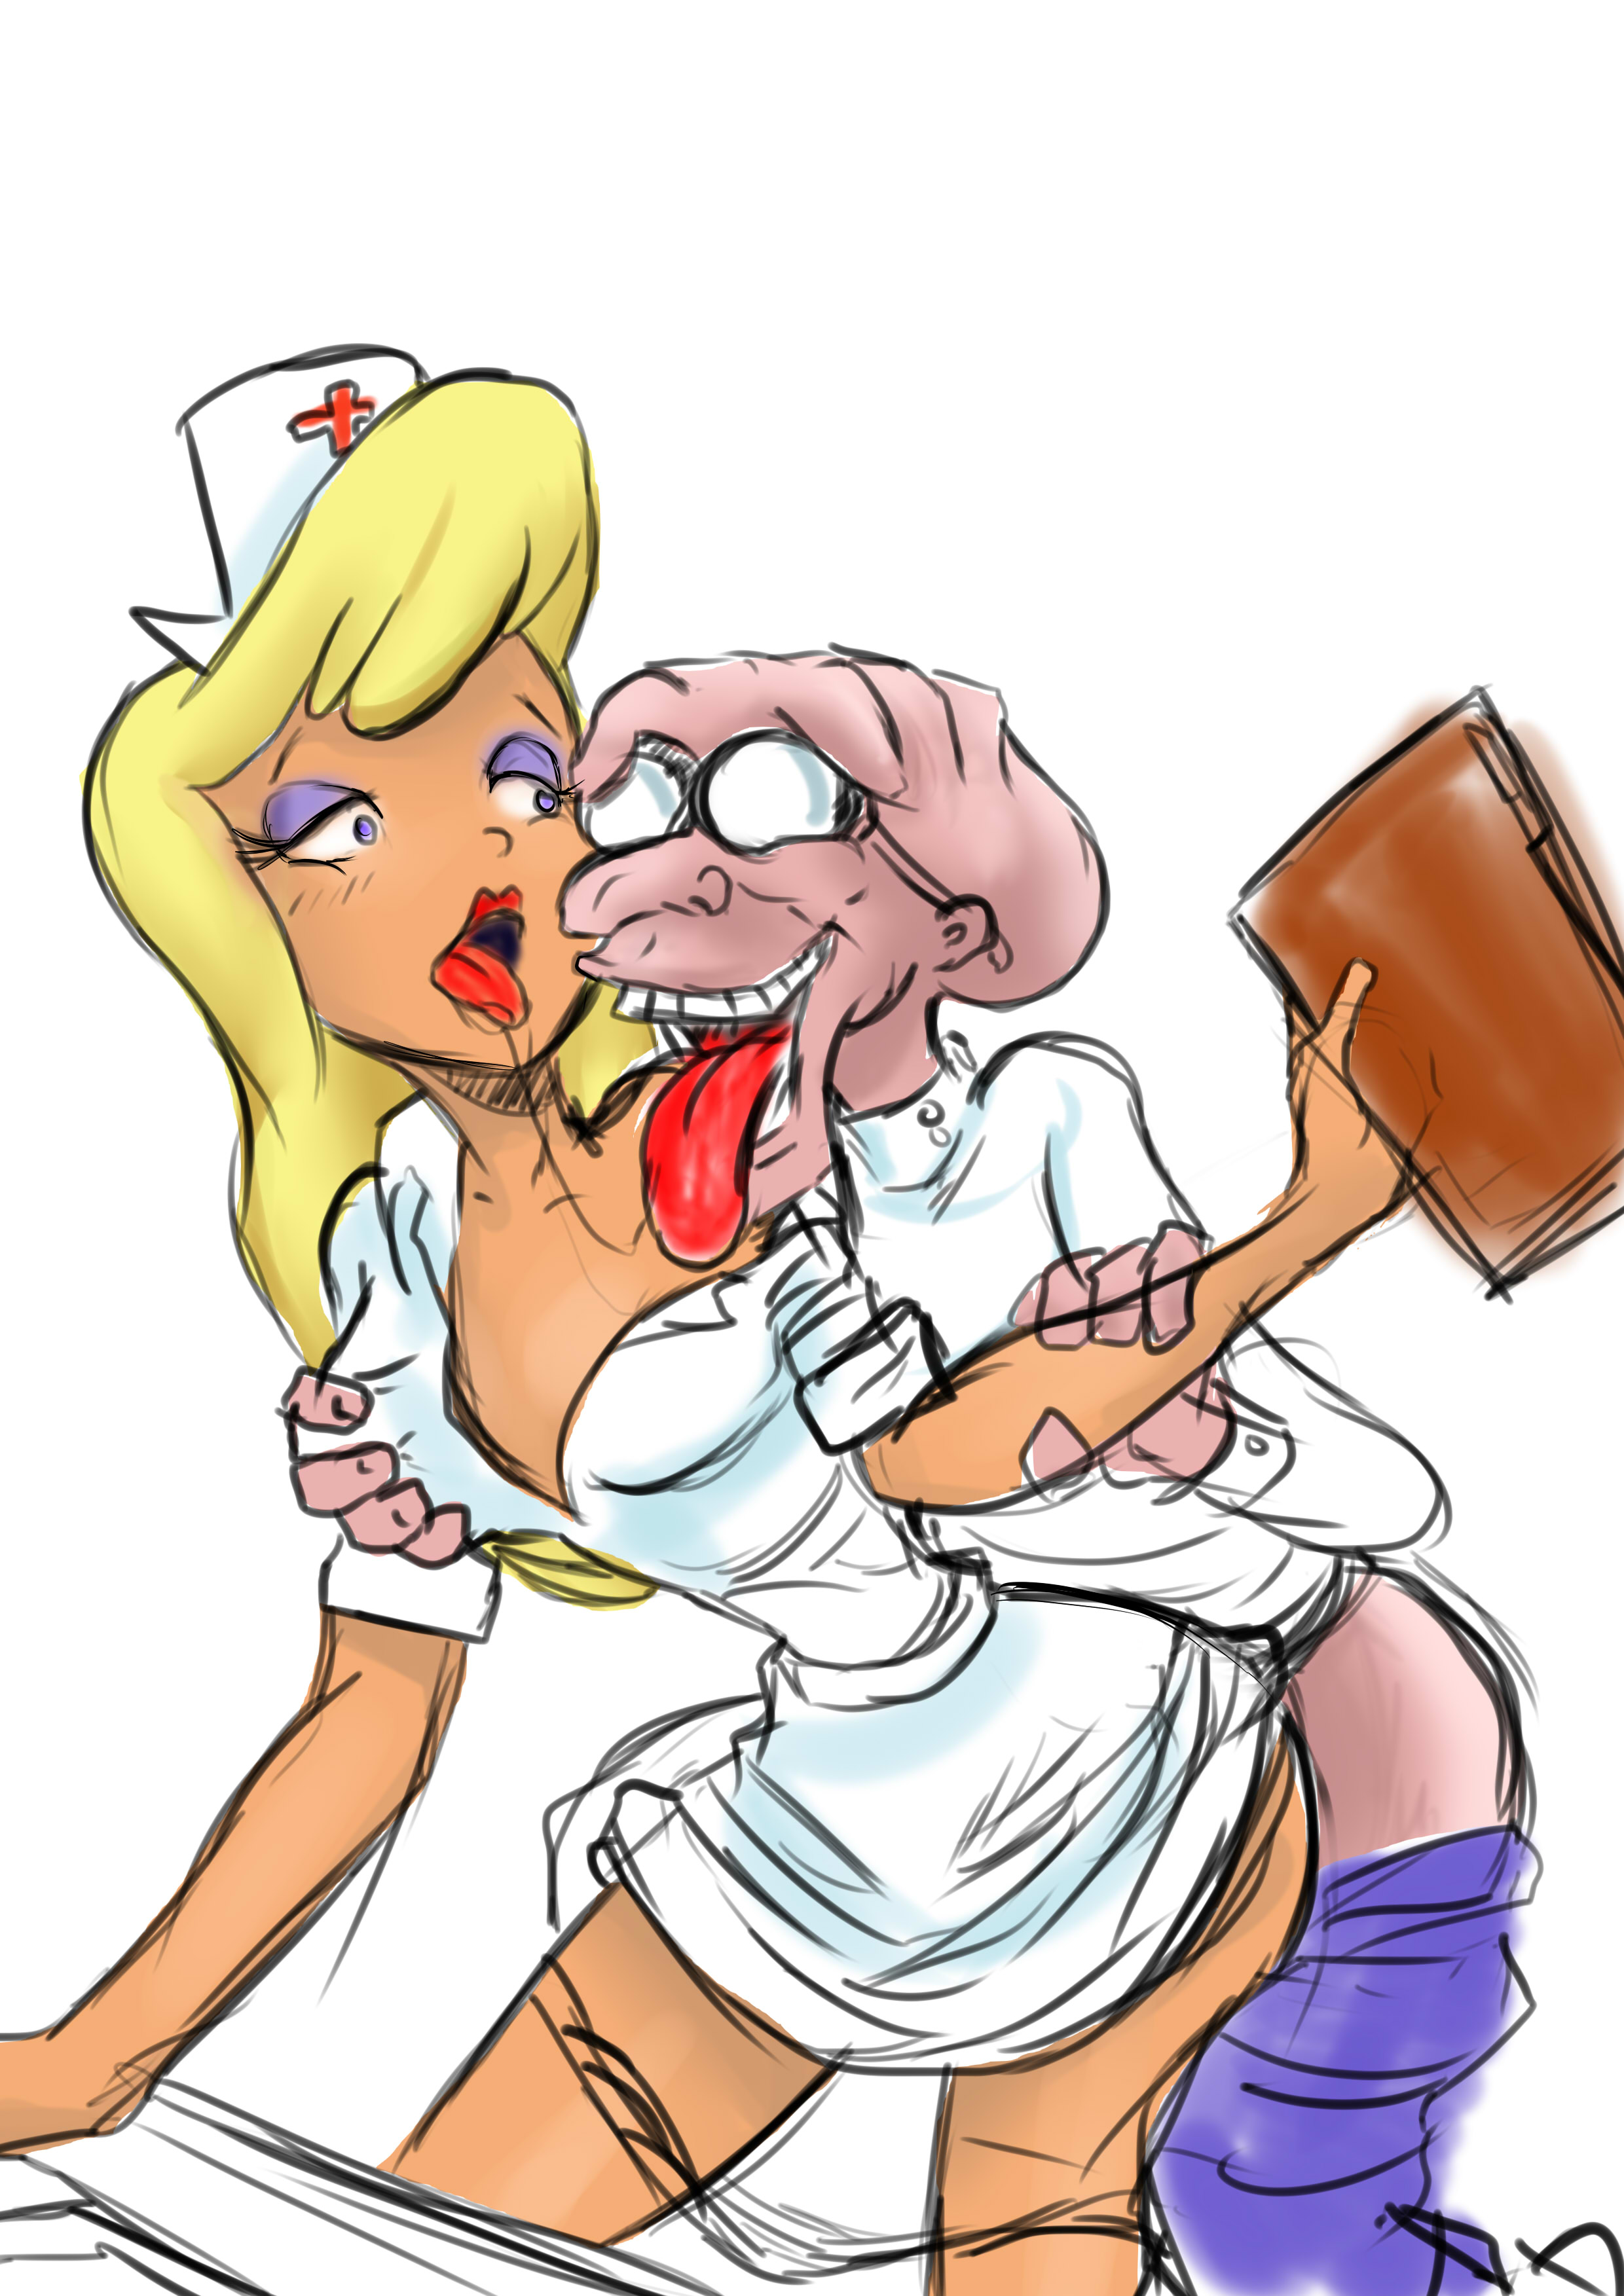 Human nurse sex porn thumbs. 